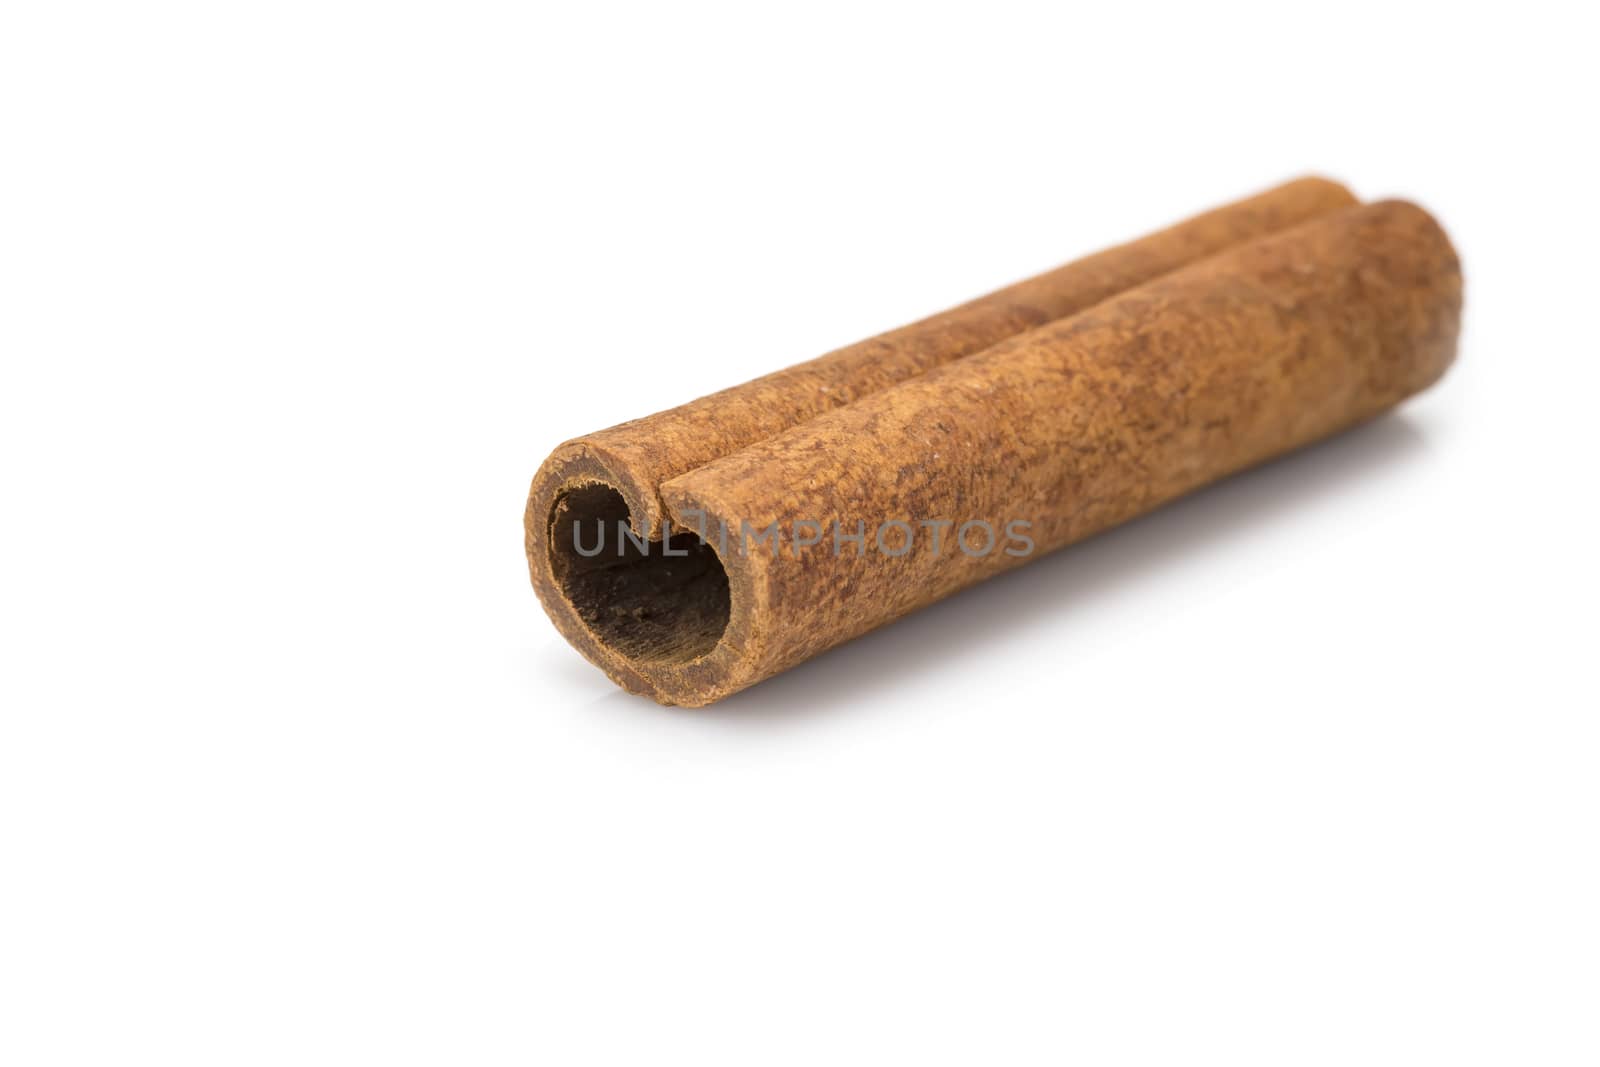 Cinnamon stick by angelsimon